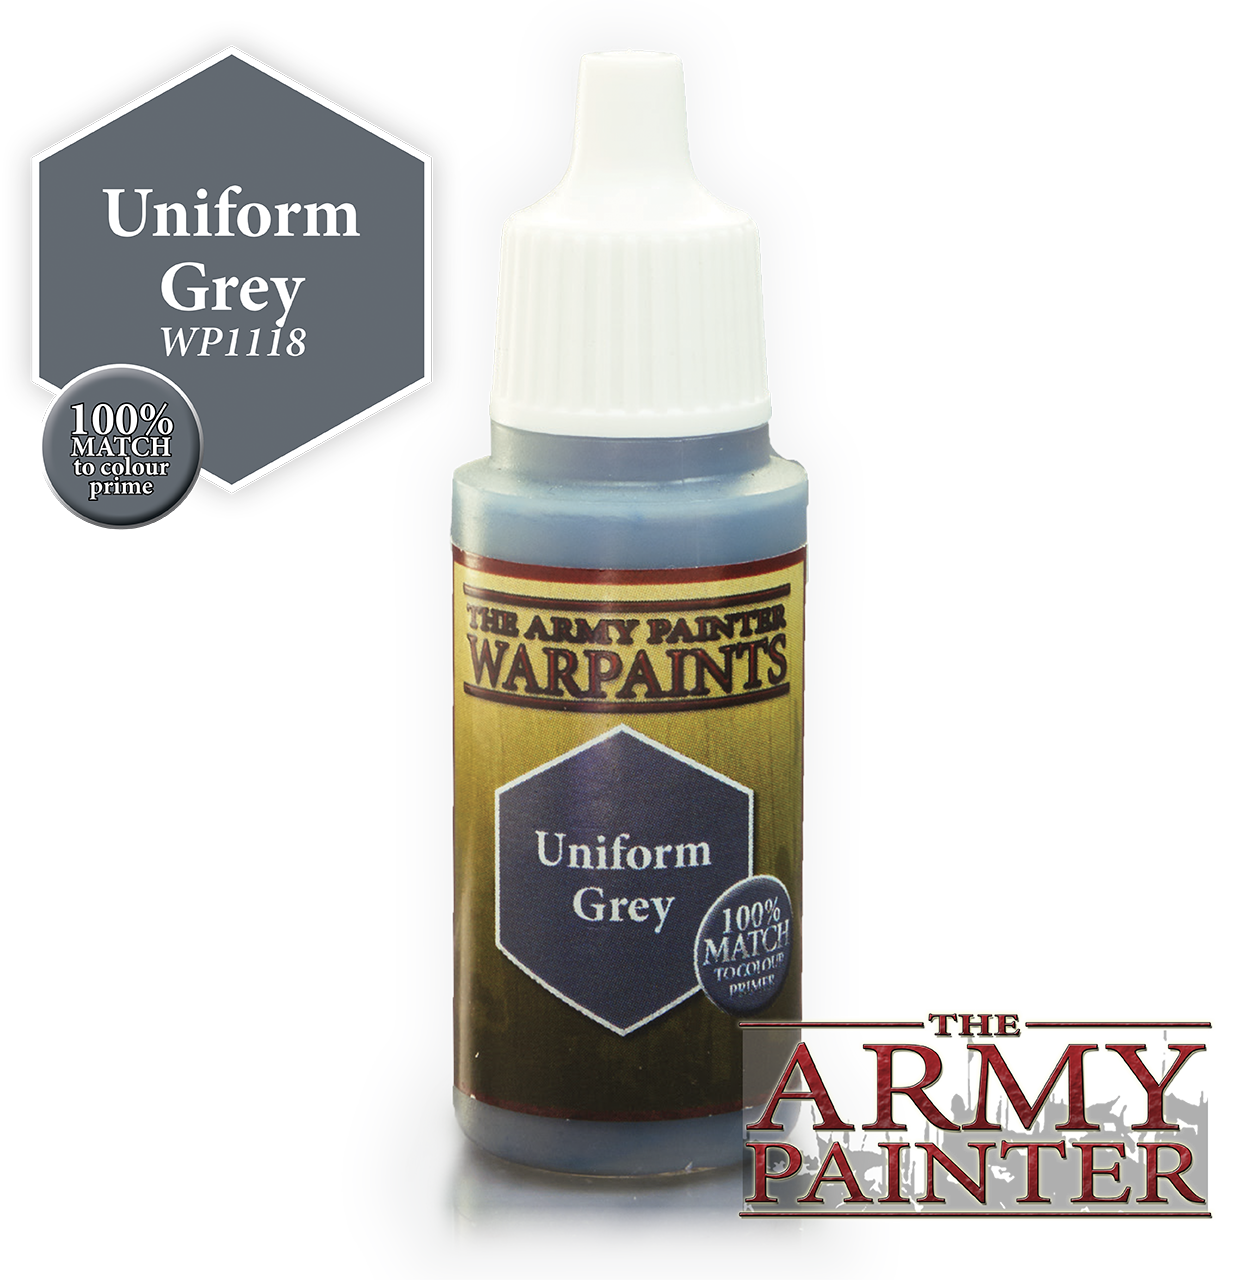 The ARMY PAINTER: Acrylics Warpaint - Uniform Grey | Tacoma Games